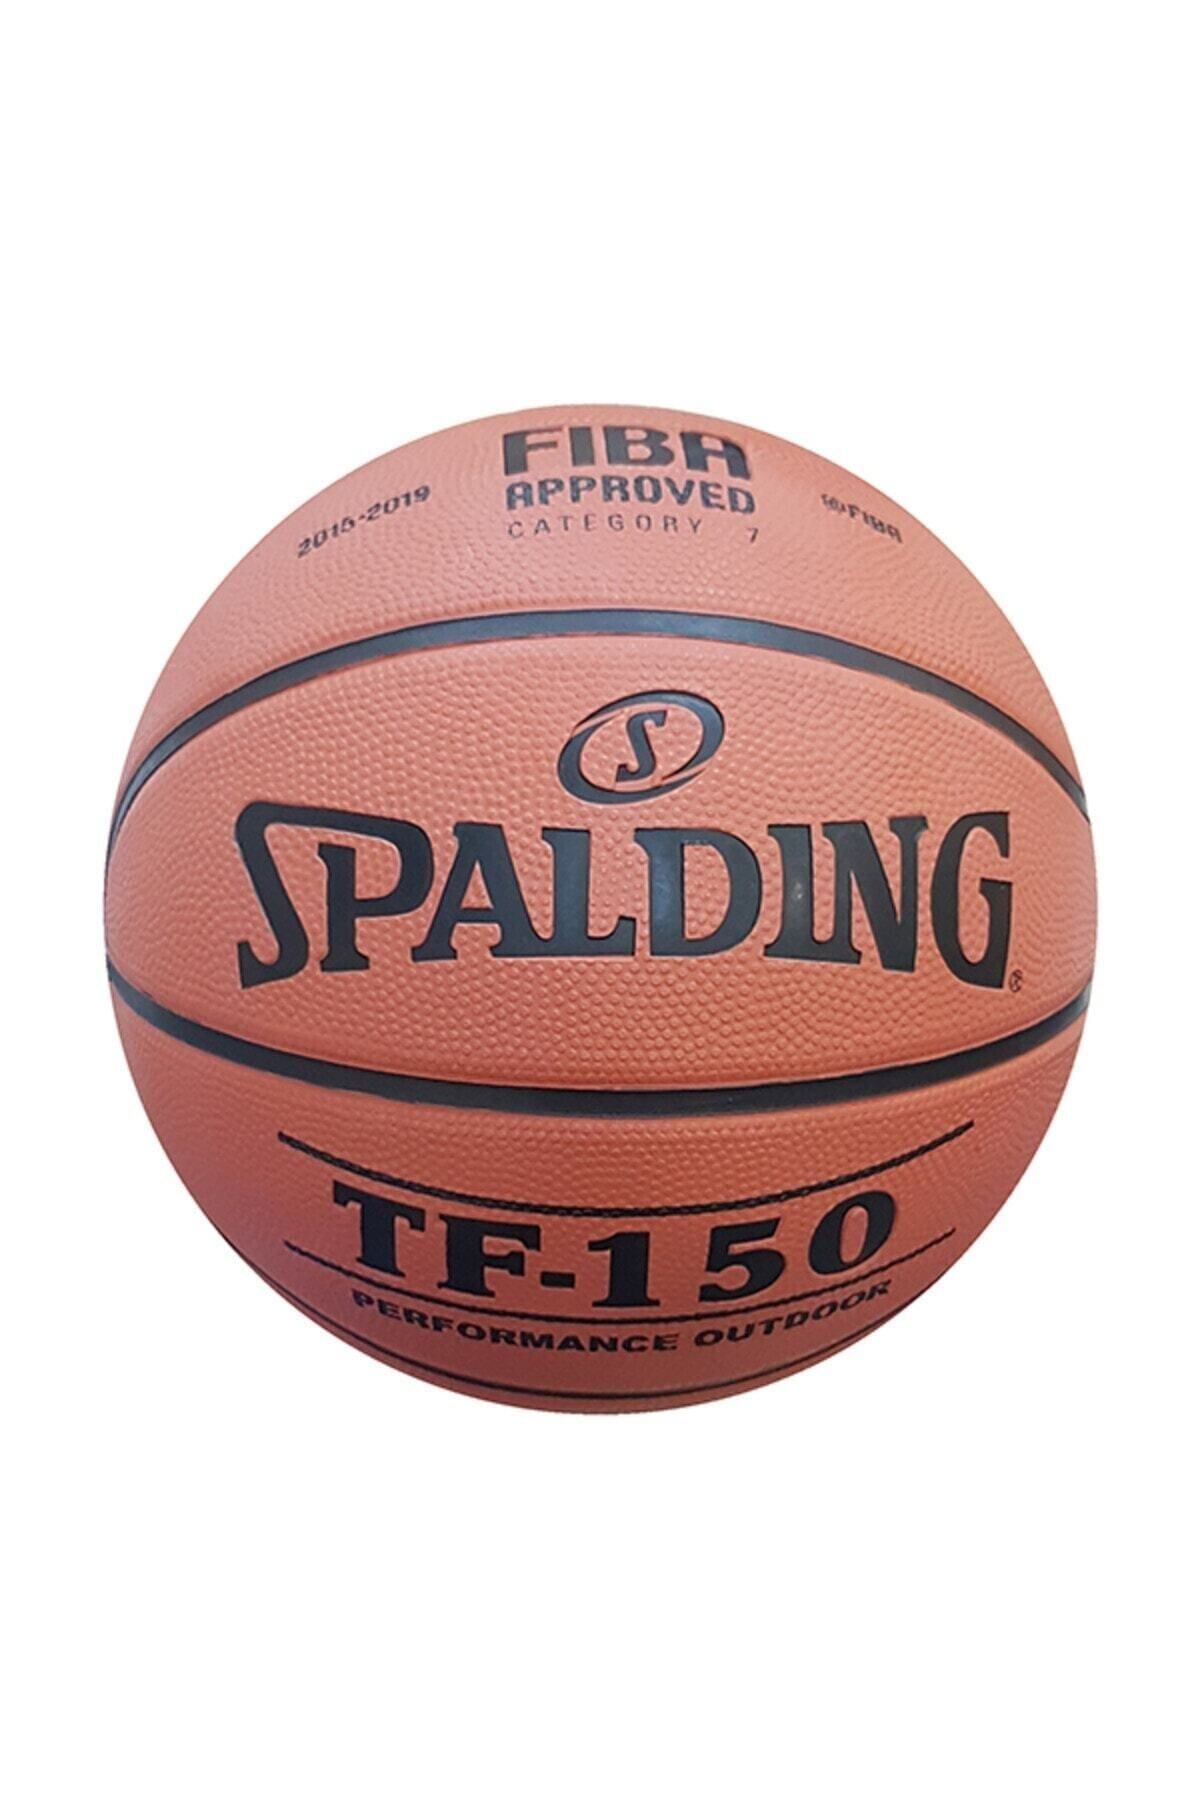 Spalding TF 150 Basketbol Topu Perform Size 6 FIBA Logolu  83 600